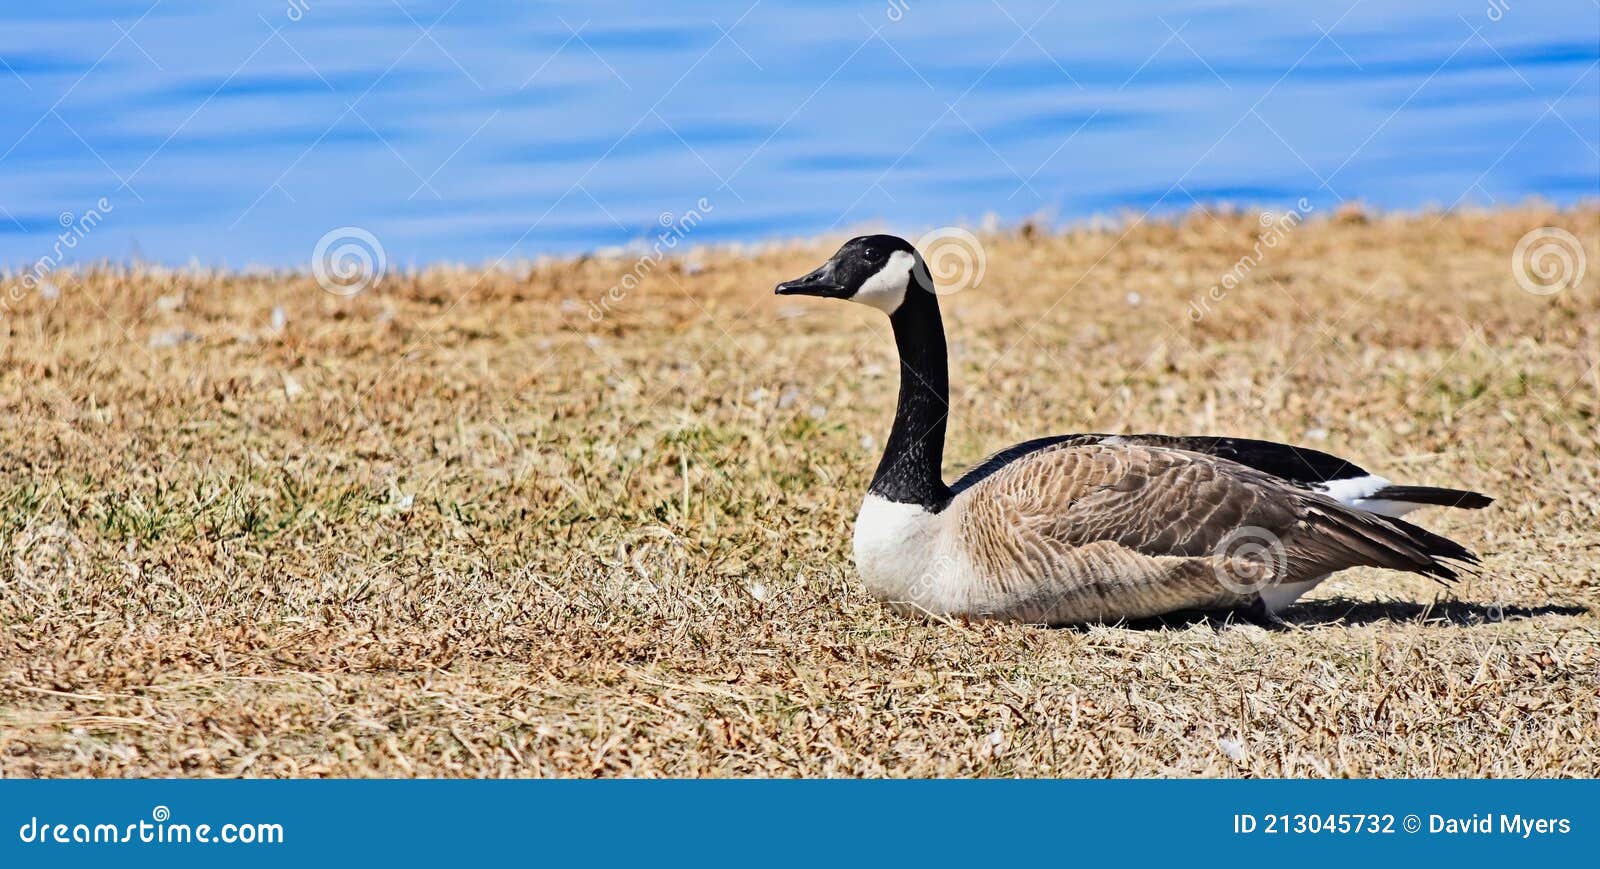 canadian goose sunning itself next to lake hefner in oklahoma city, ok